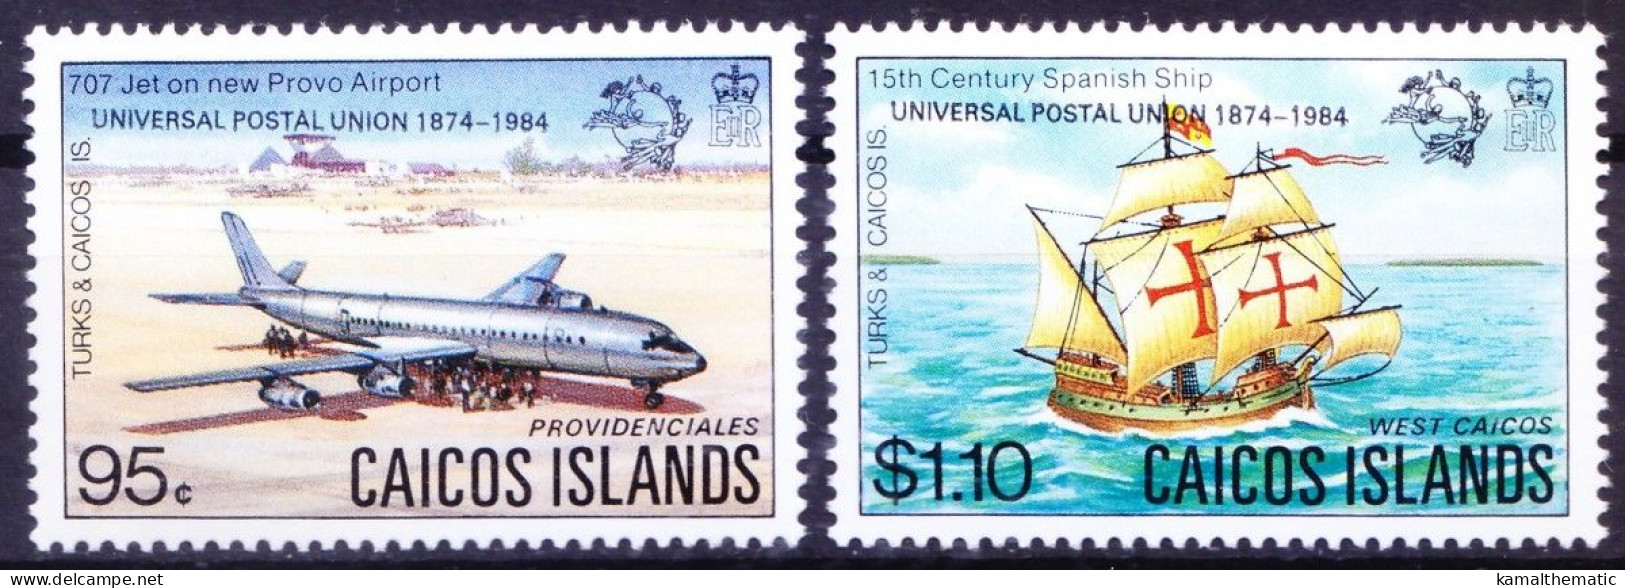 Caicos Islands 1984 MNH 2v, U.P.U. Hamburg, Overprint - WPV (Weltpostverein)